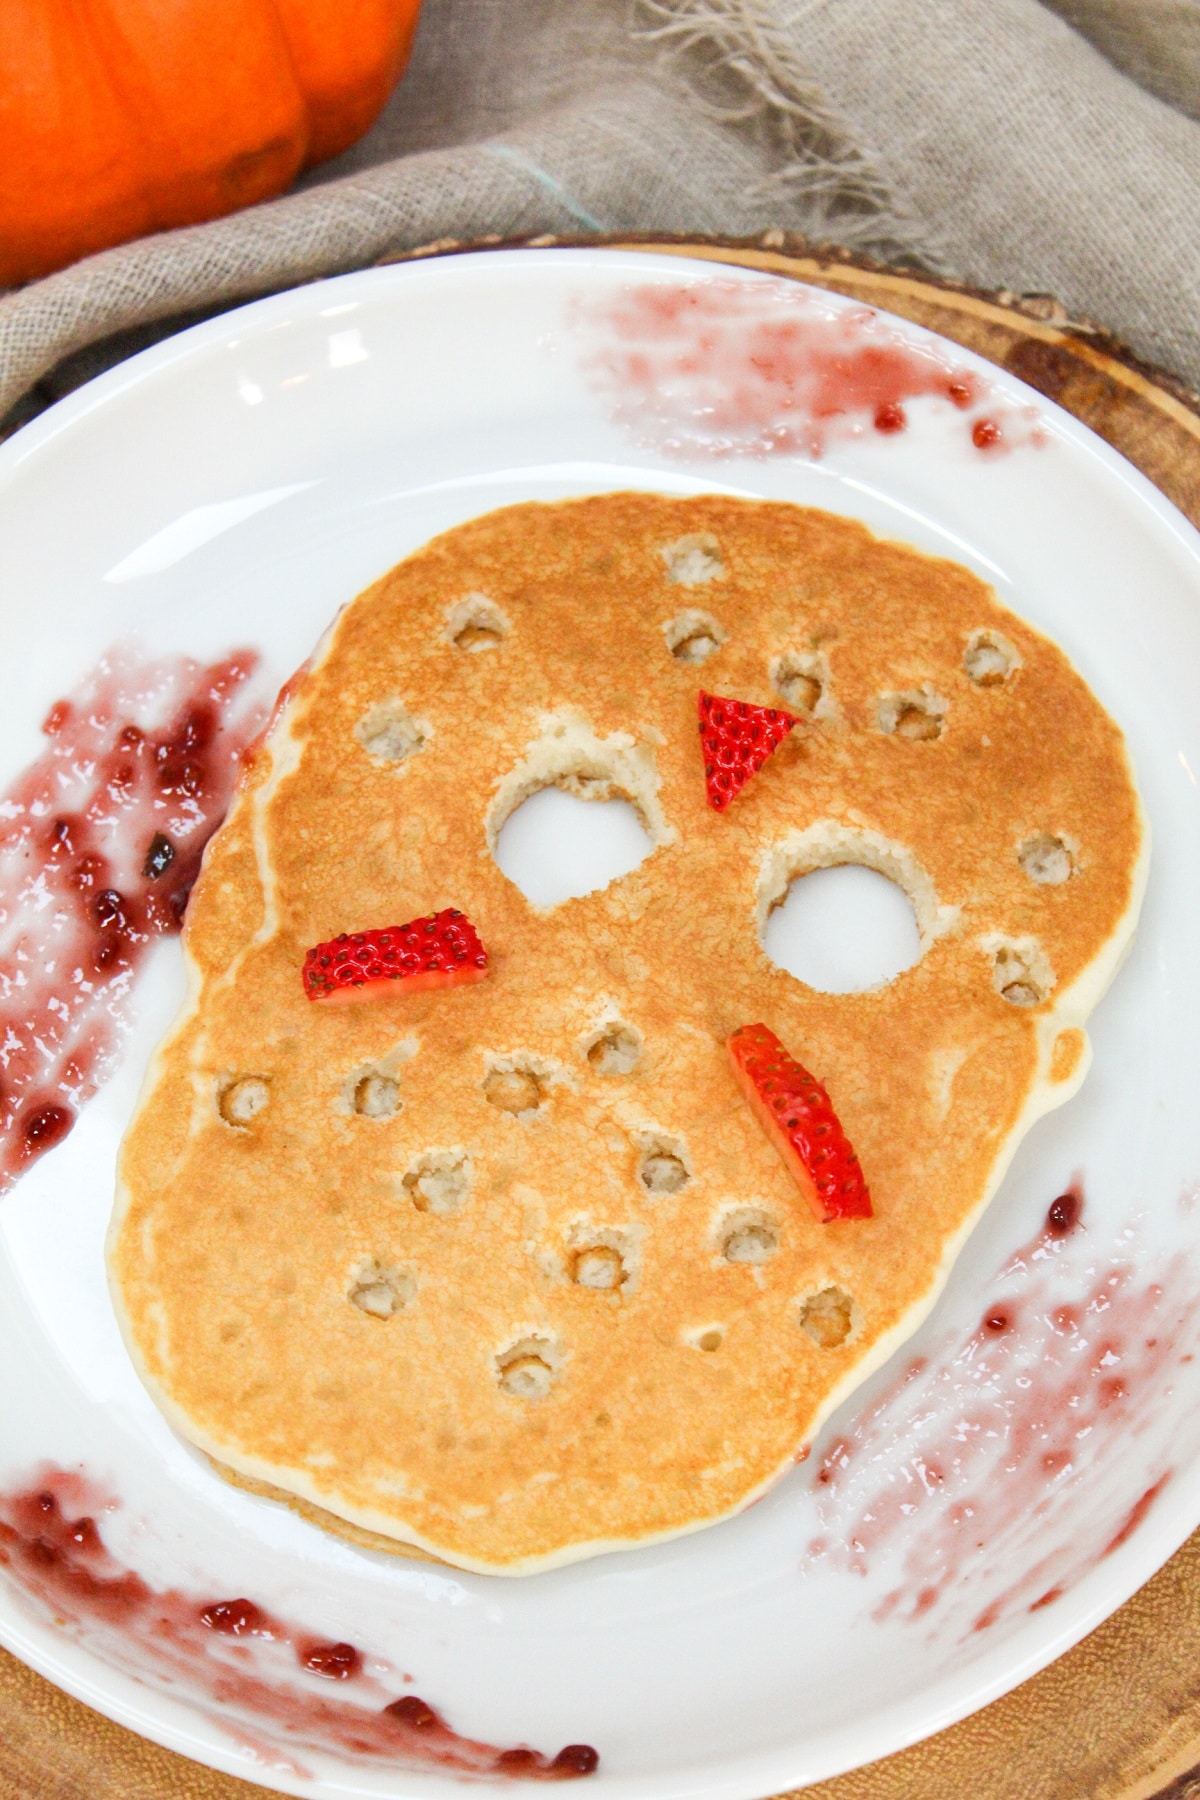 jason vorhees ski mask pancake on a plate with raspberry jam on the plate